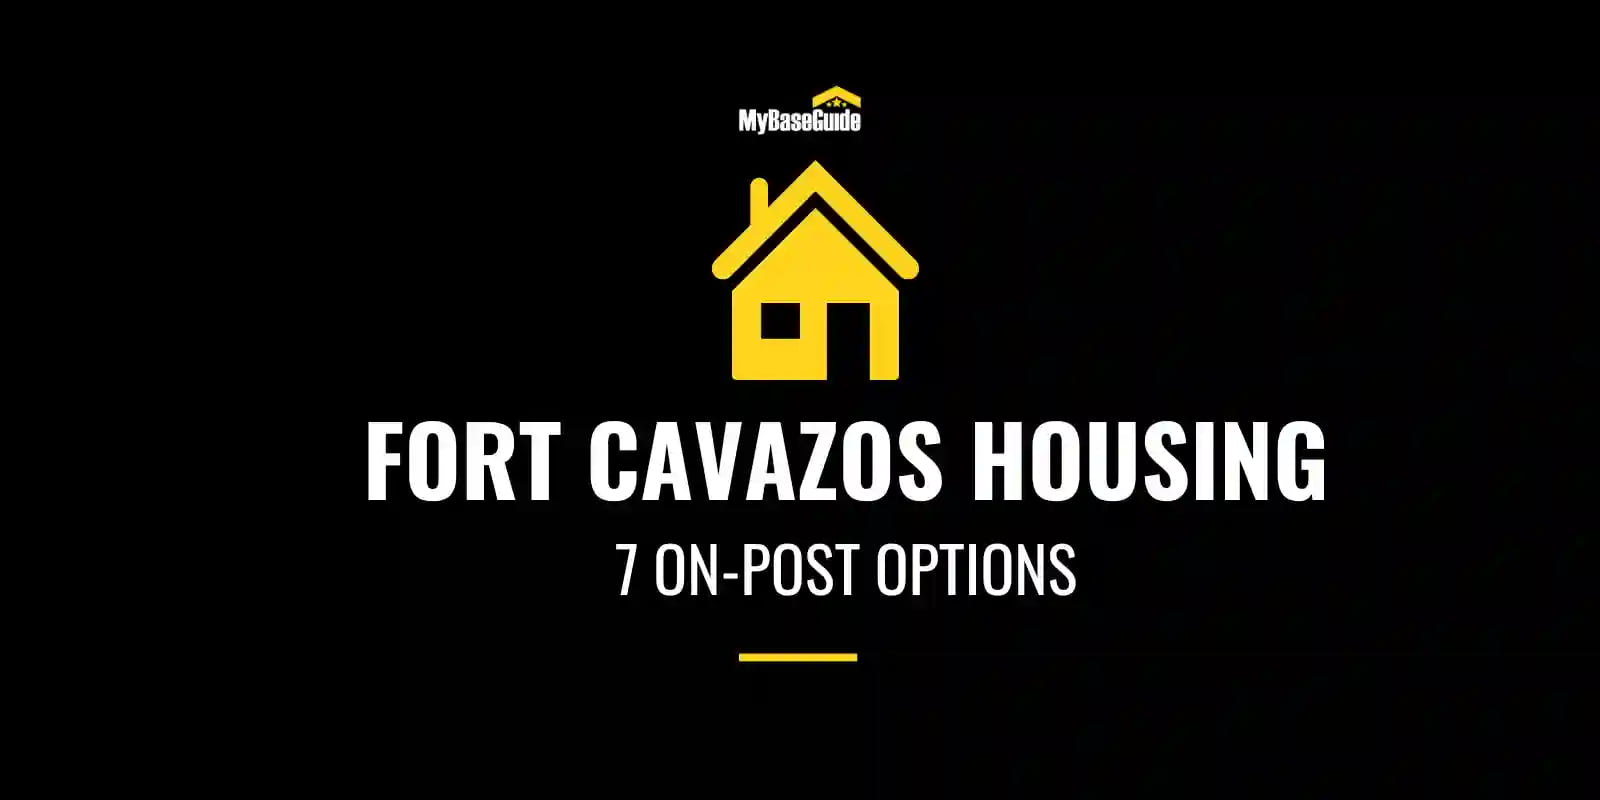 Fort Cavazos Housing: 7 On-Post Options